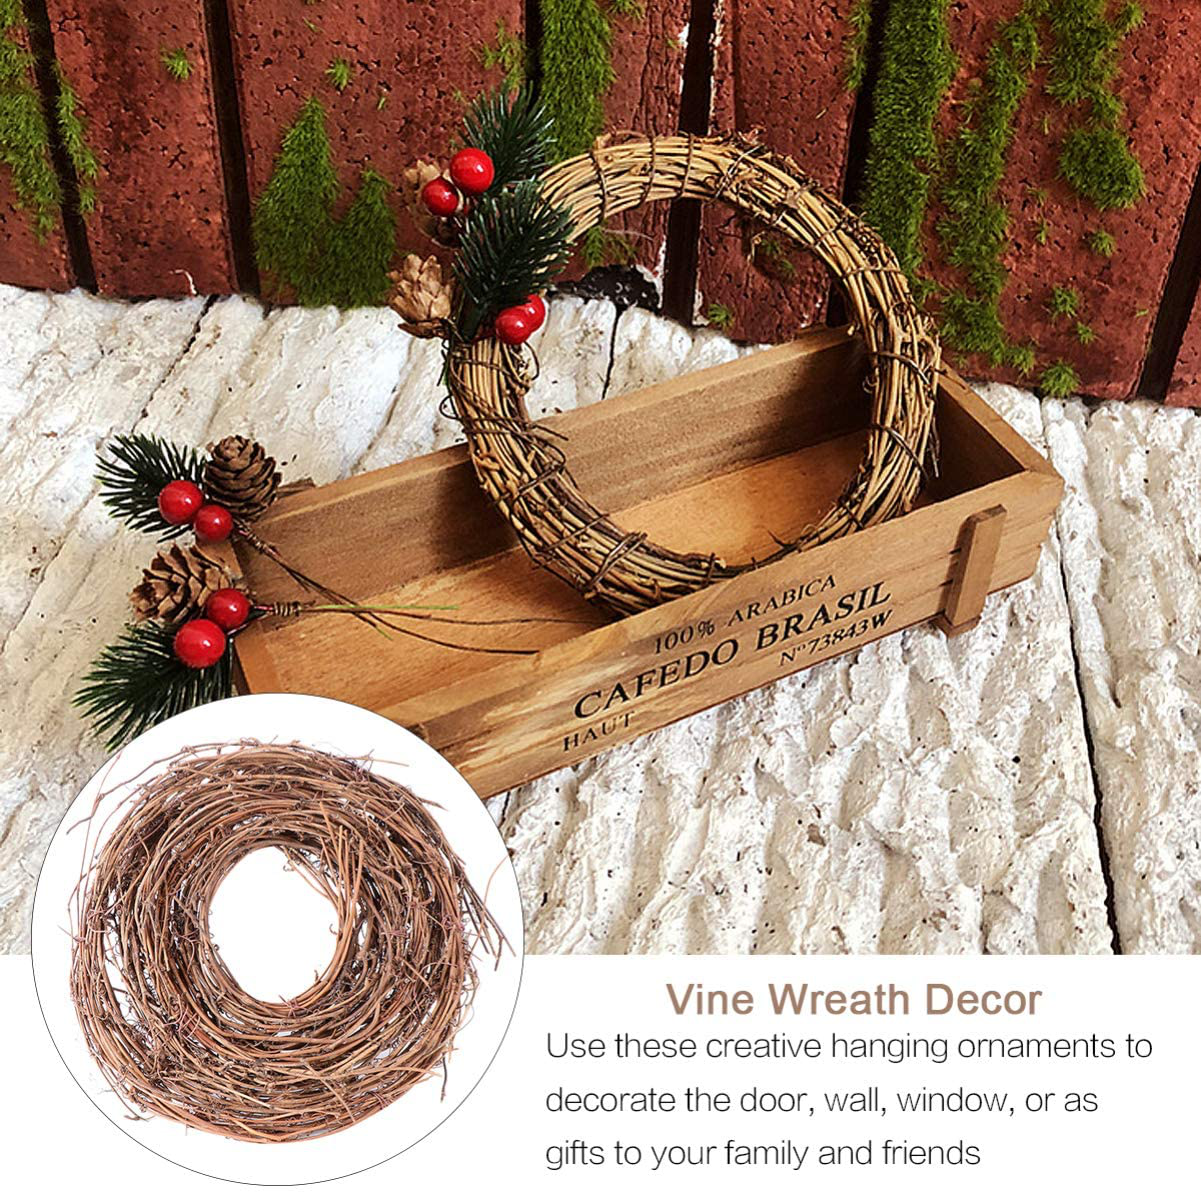 Garneck 15Ft Twig Garland, Christmas DIY Crafts Natural Grapevine Twig Garland Wreaths Decor for Christmas Holiday Home Decor